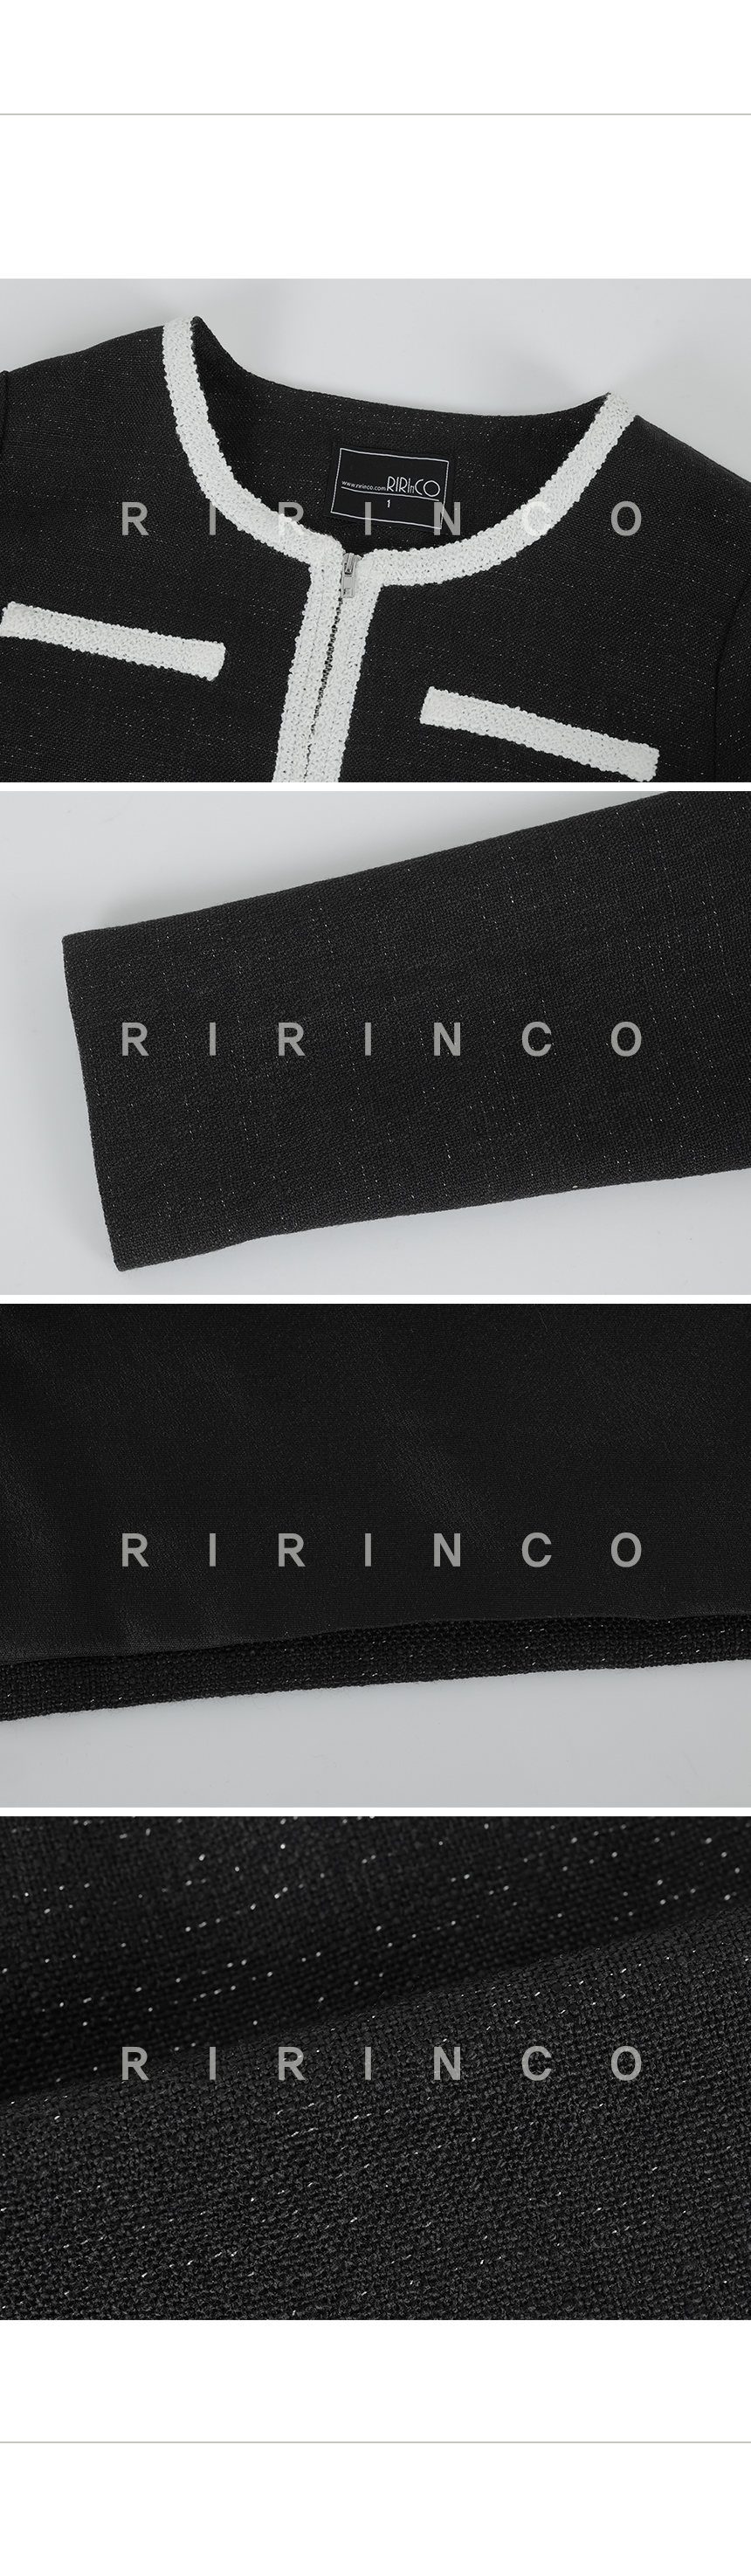 RIRINCO ツーピースツイードバイカラークロップドジャケット